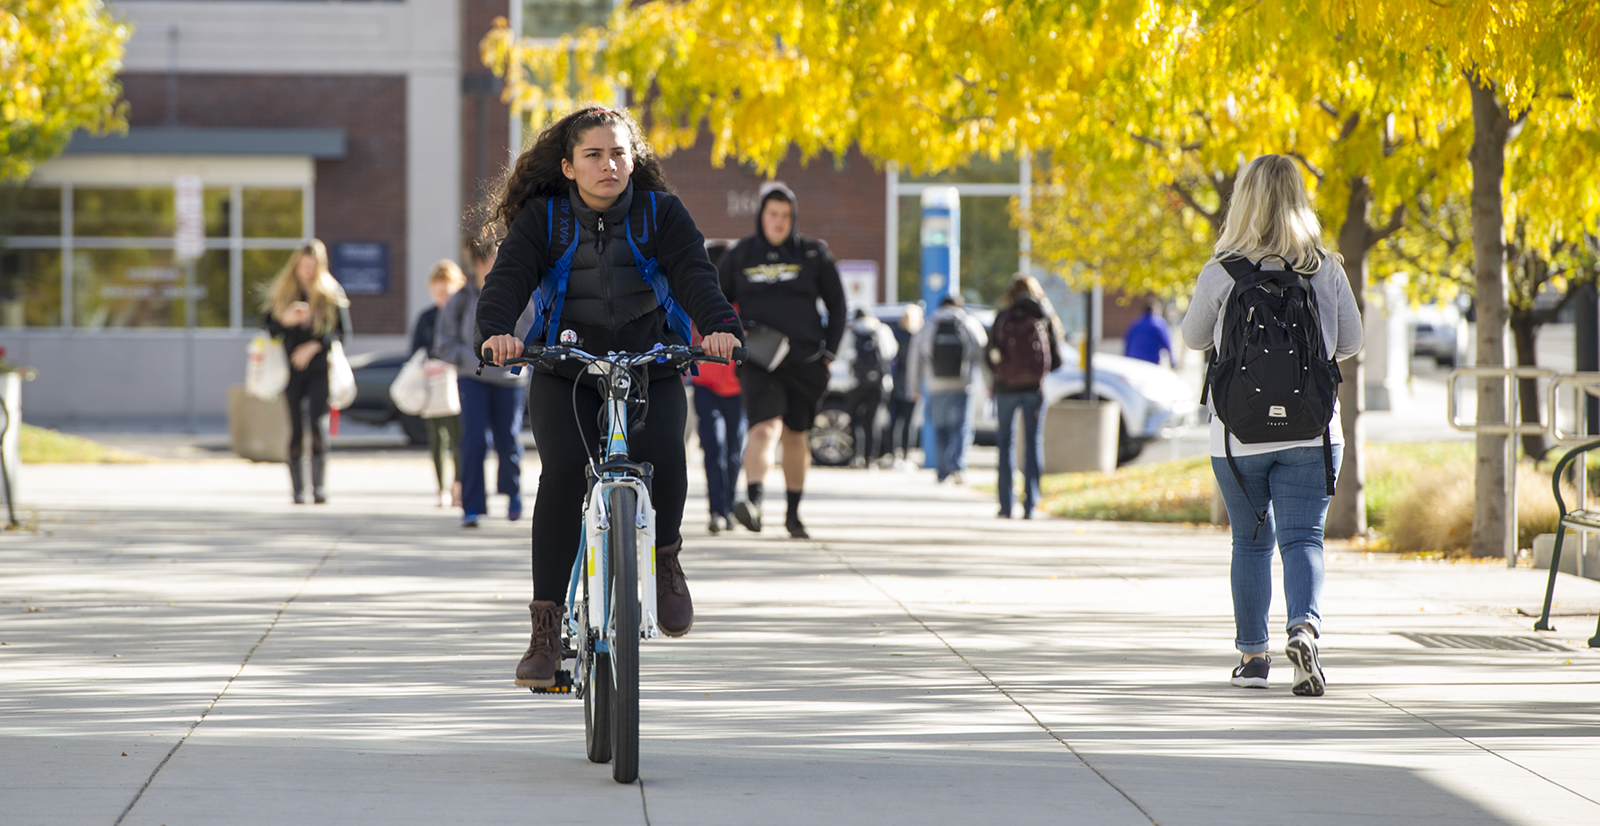 Student riding bike through campus